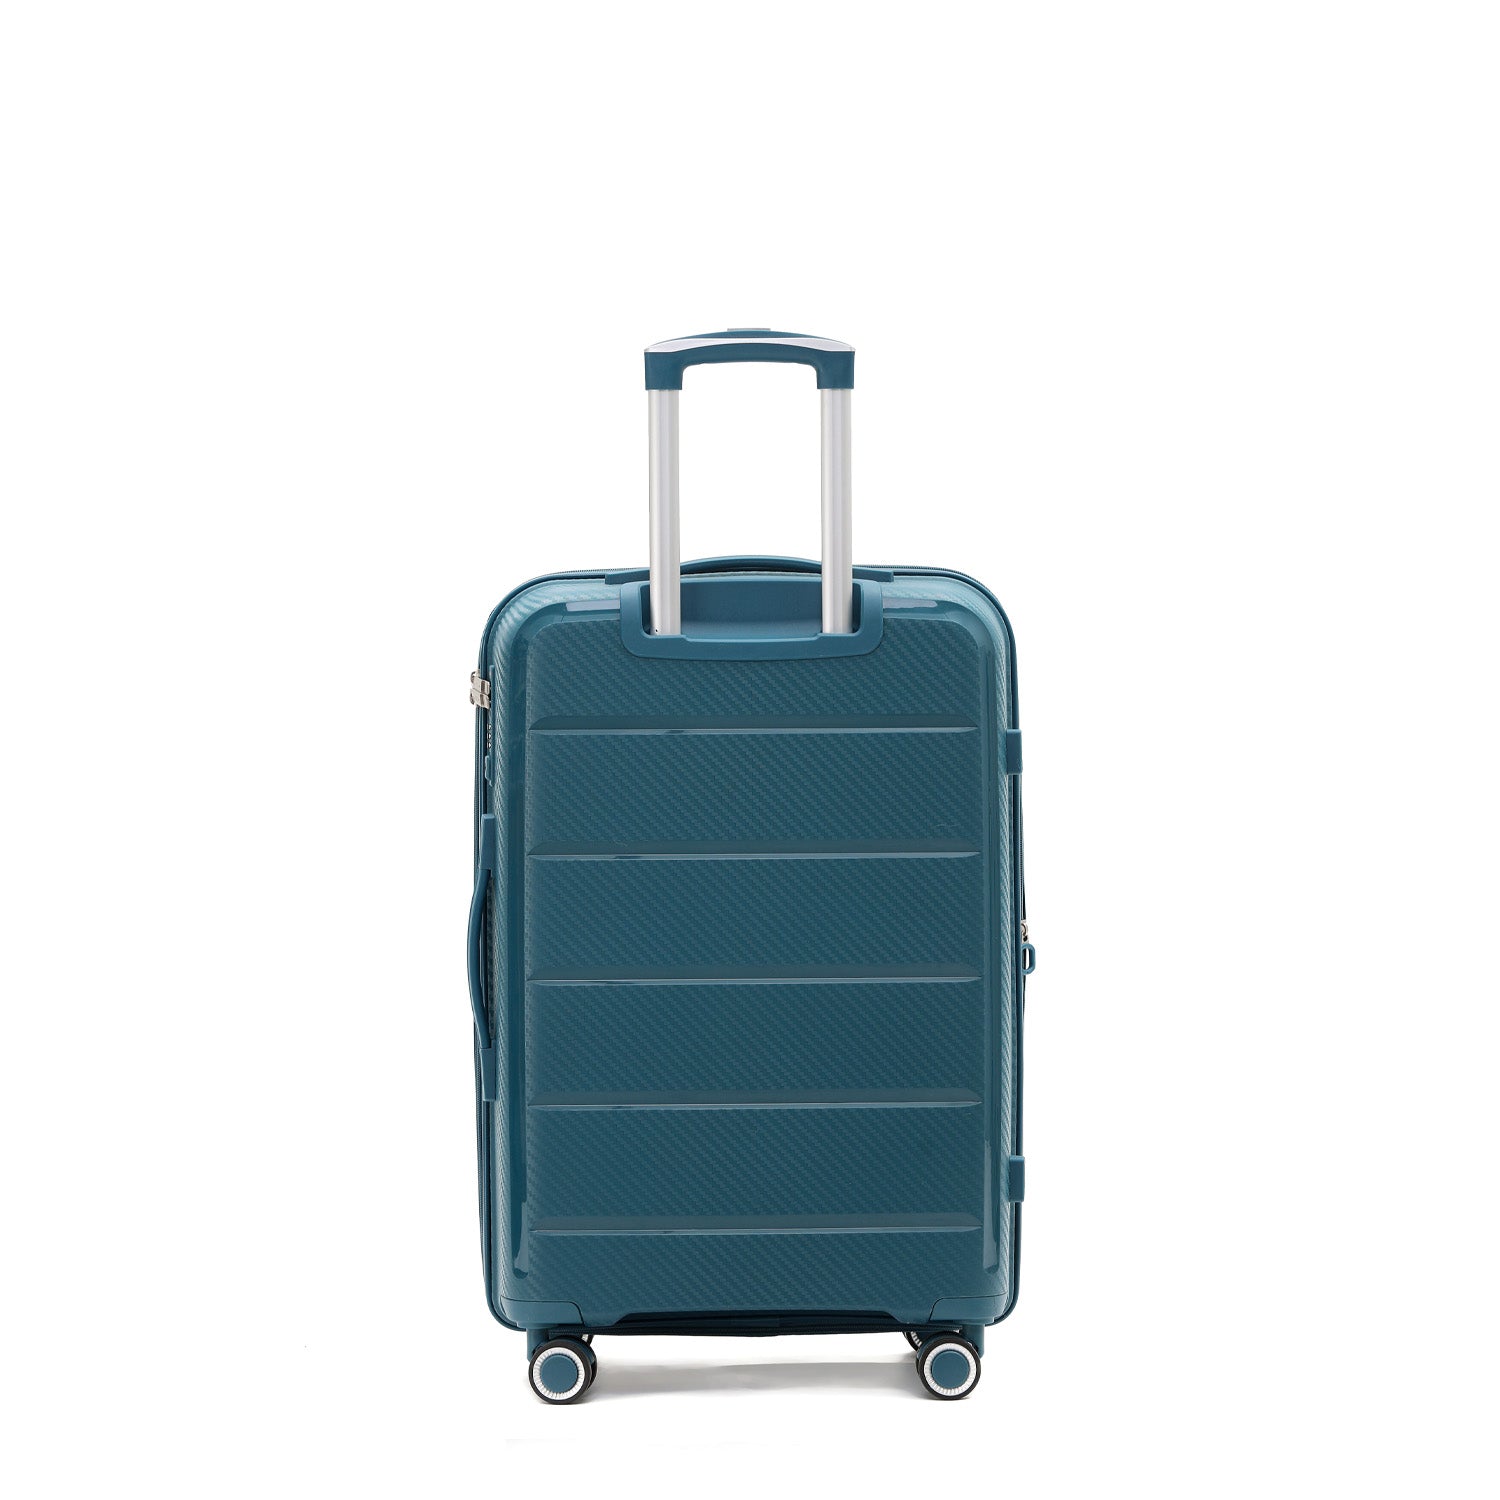 Paklite - PA7350 Set of 3 Suitcases - Blue-10